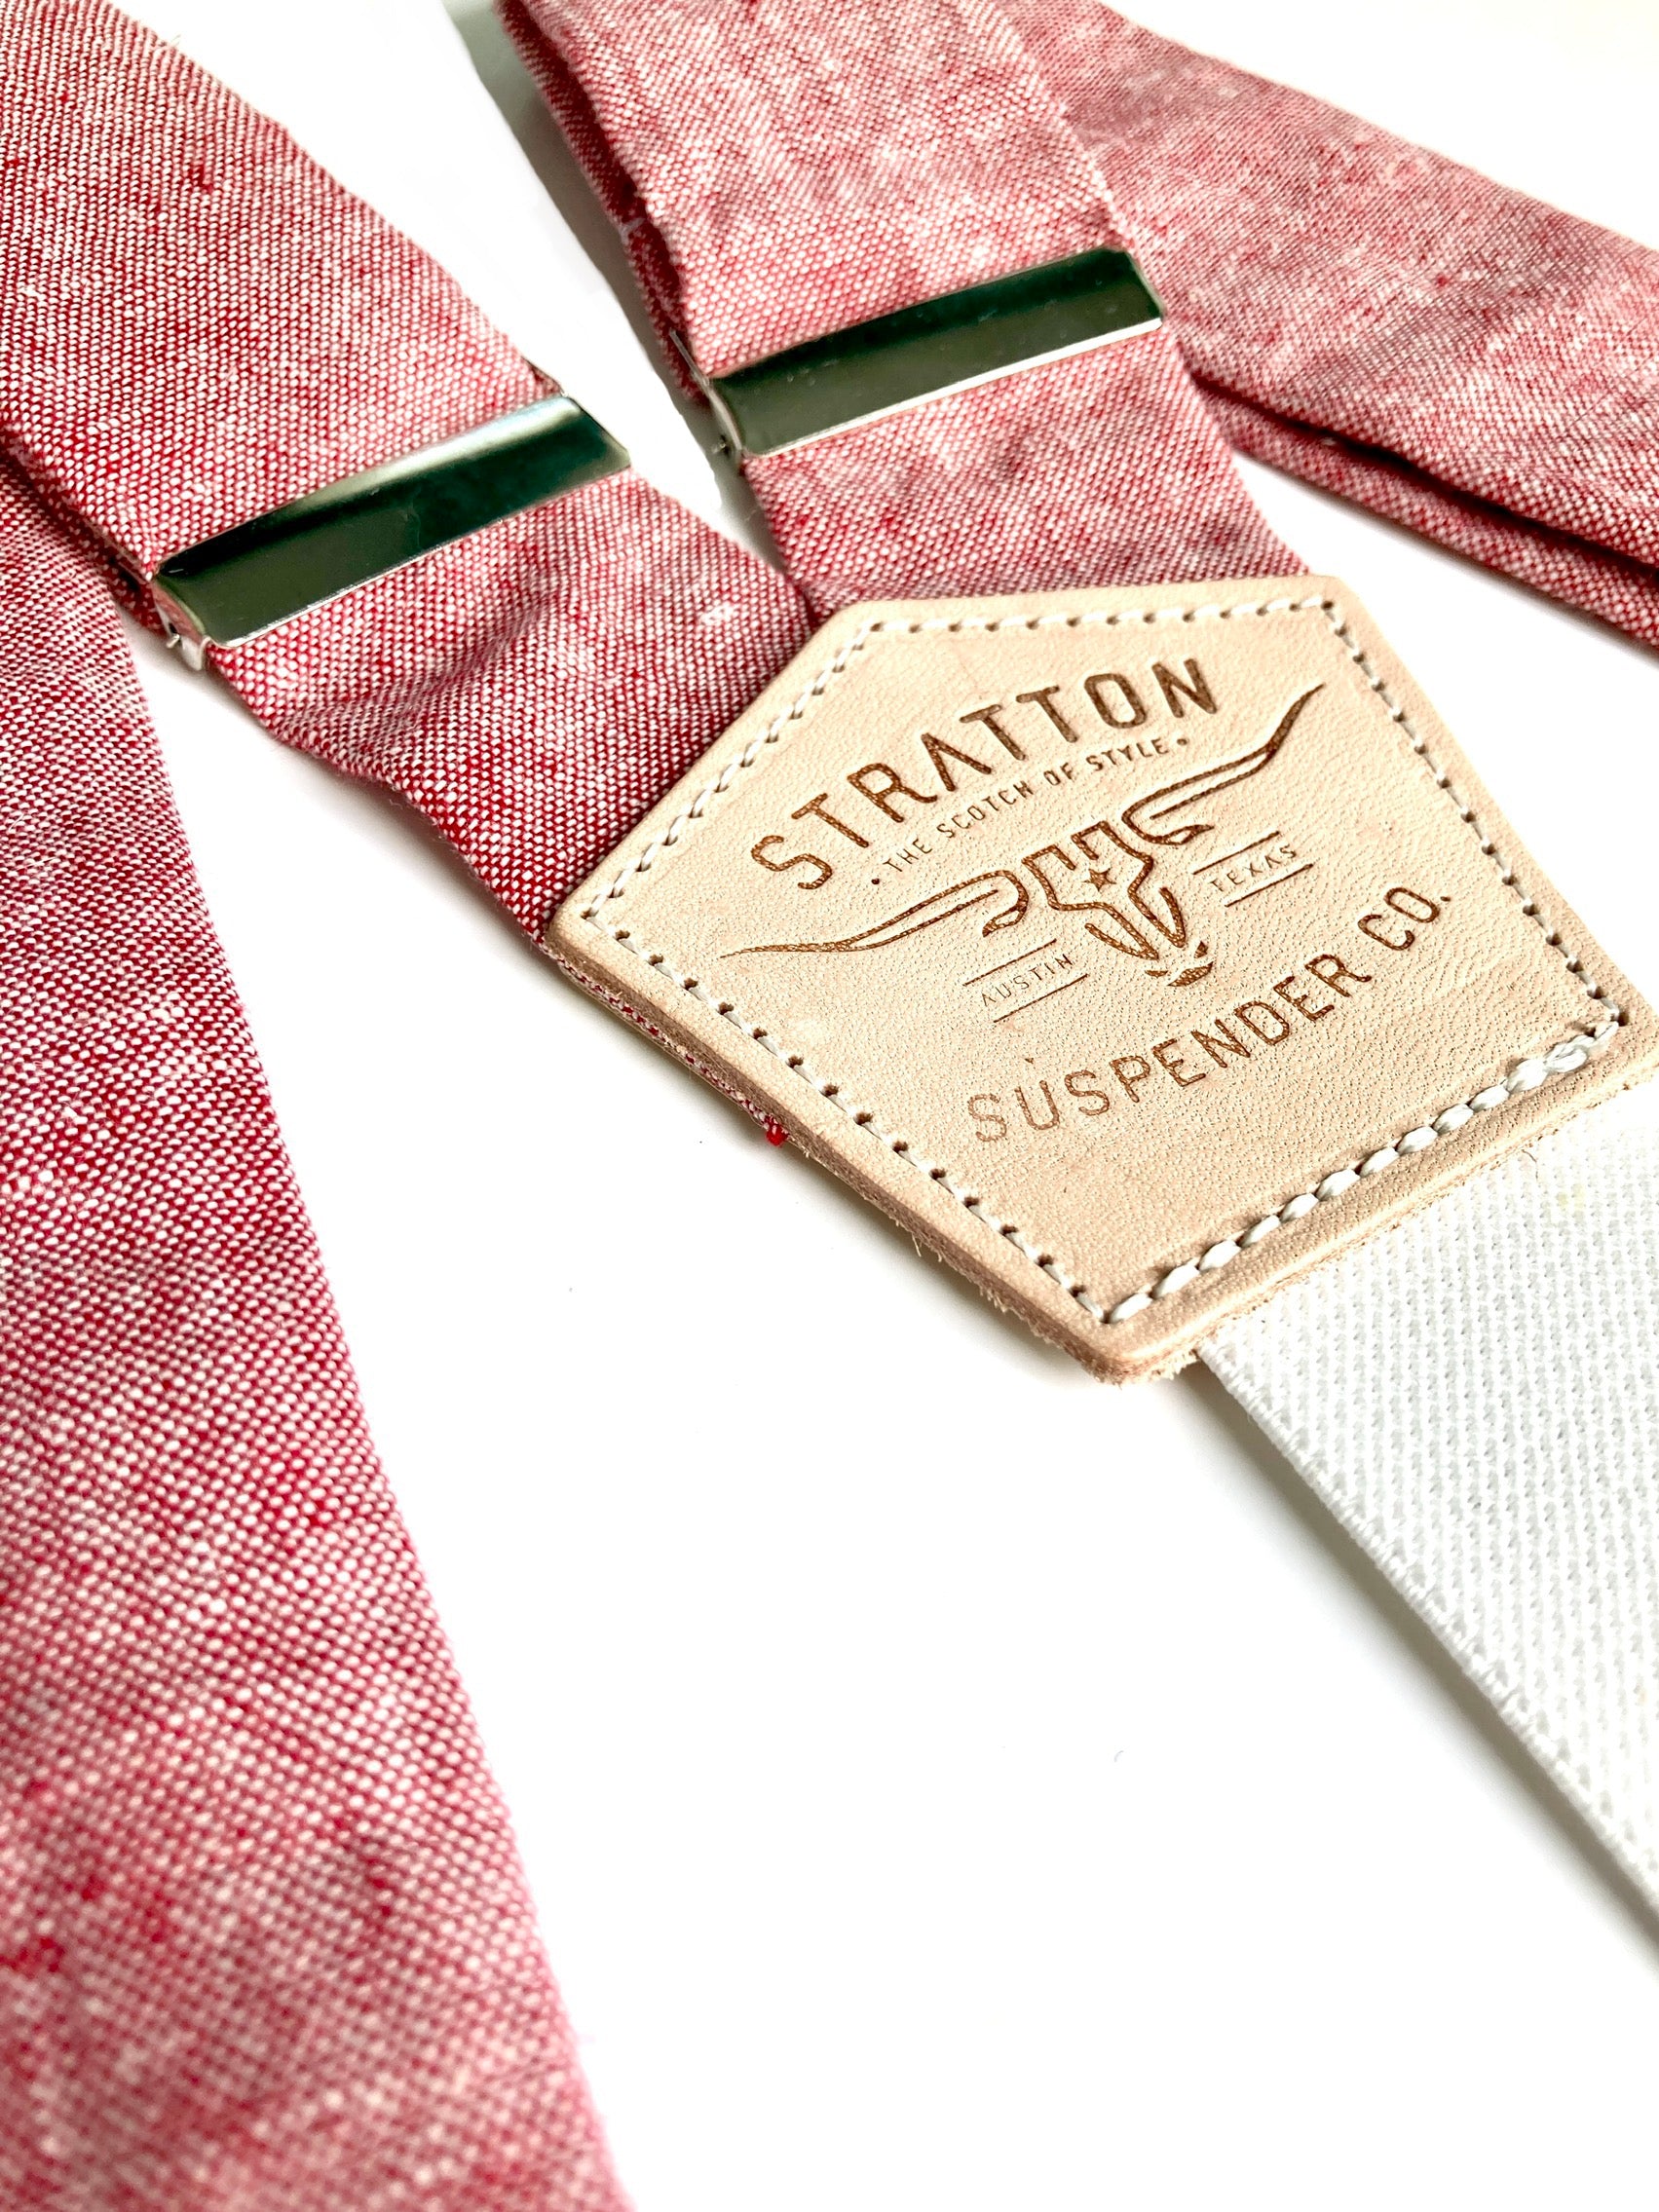 Stratton Suspender Co. Straps in Bandera Red Linen